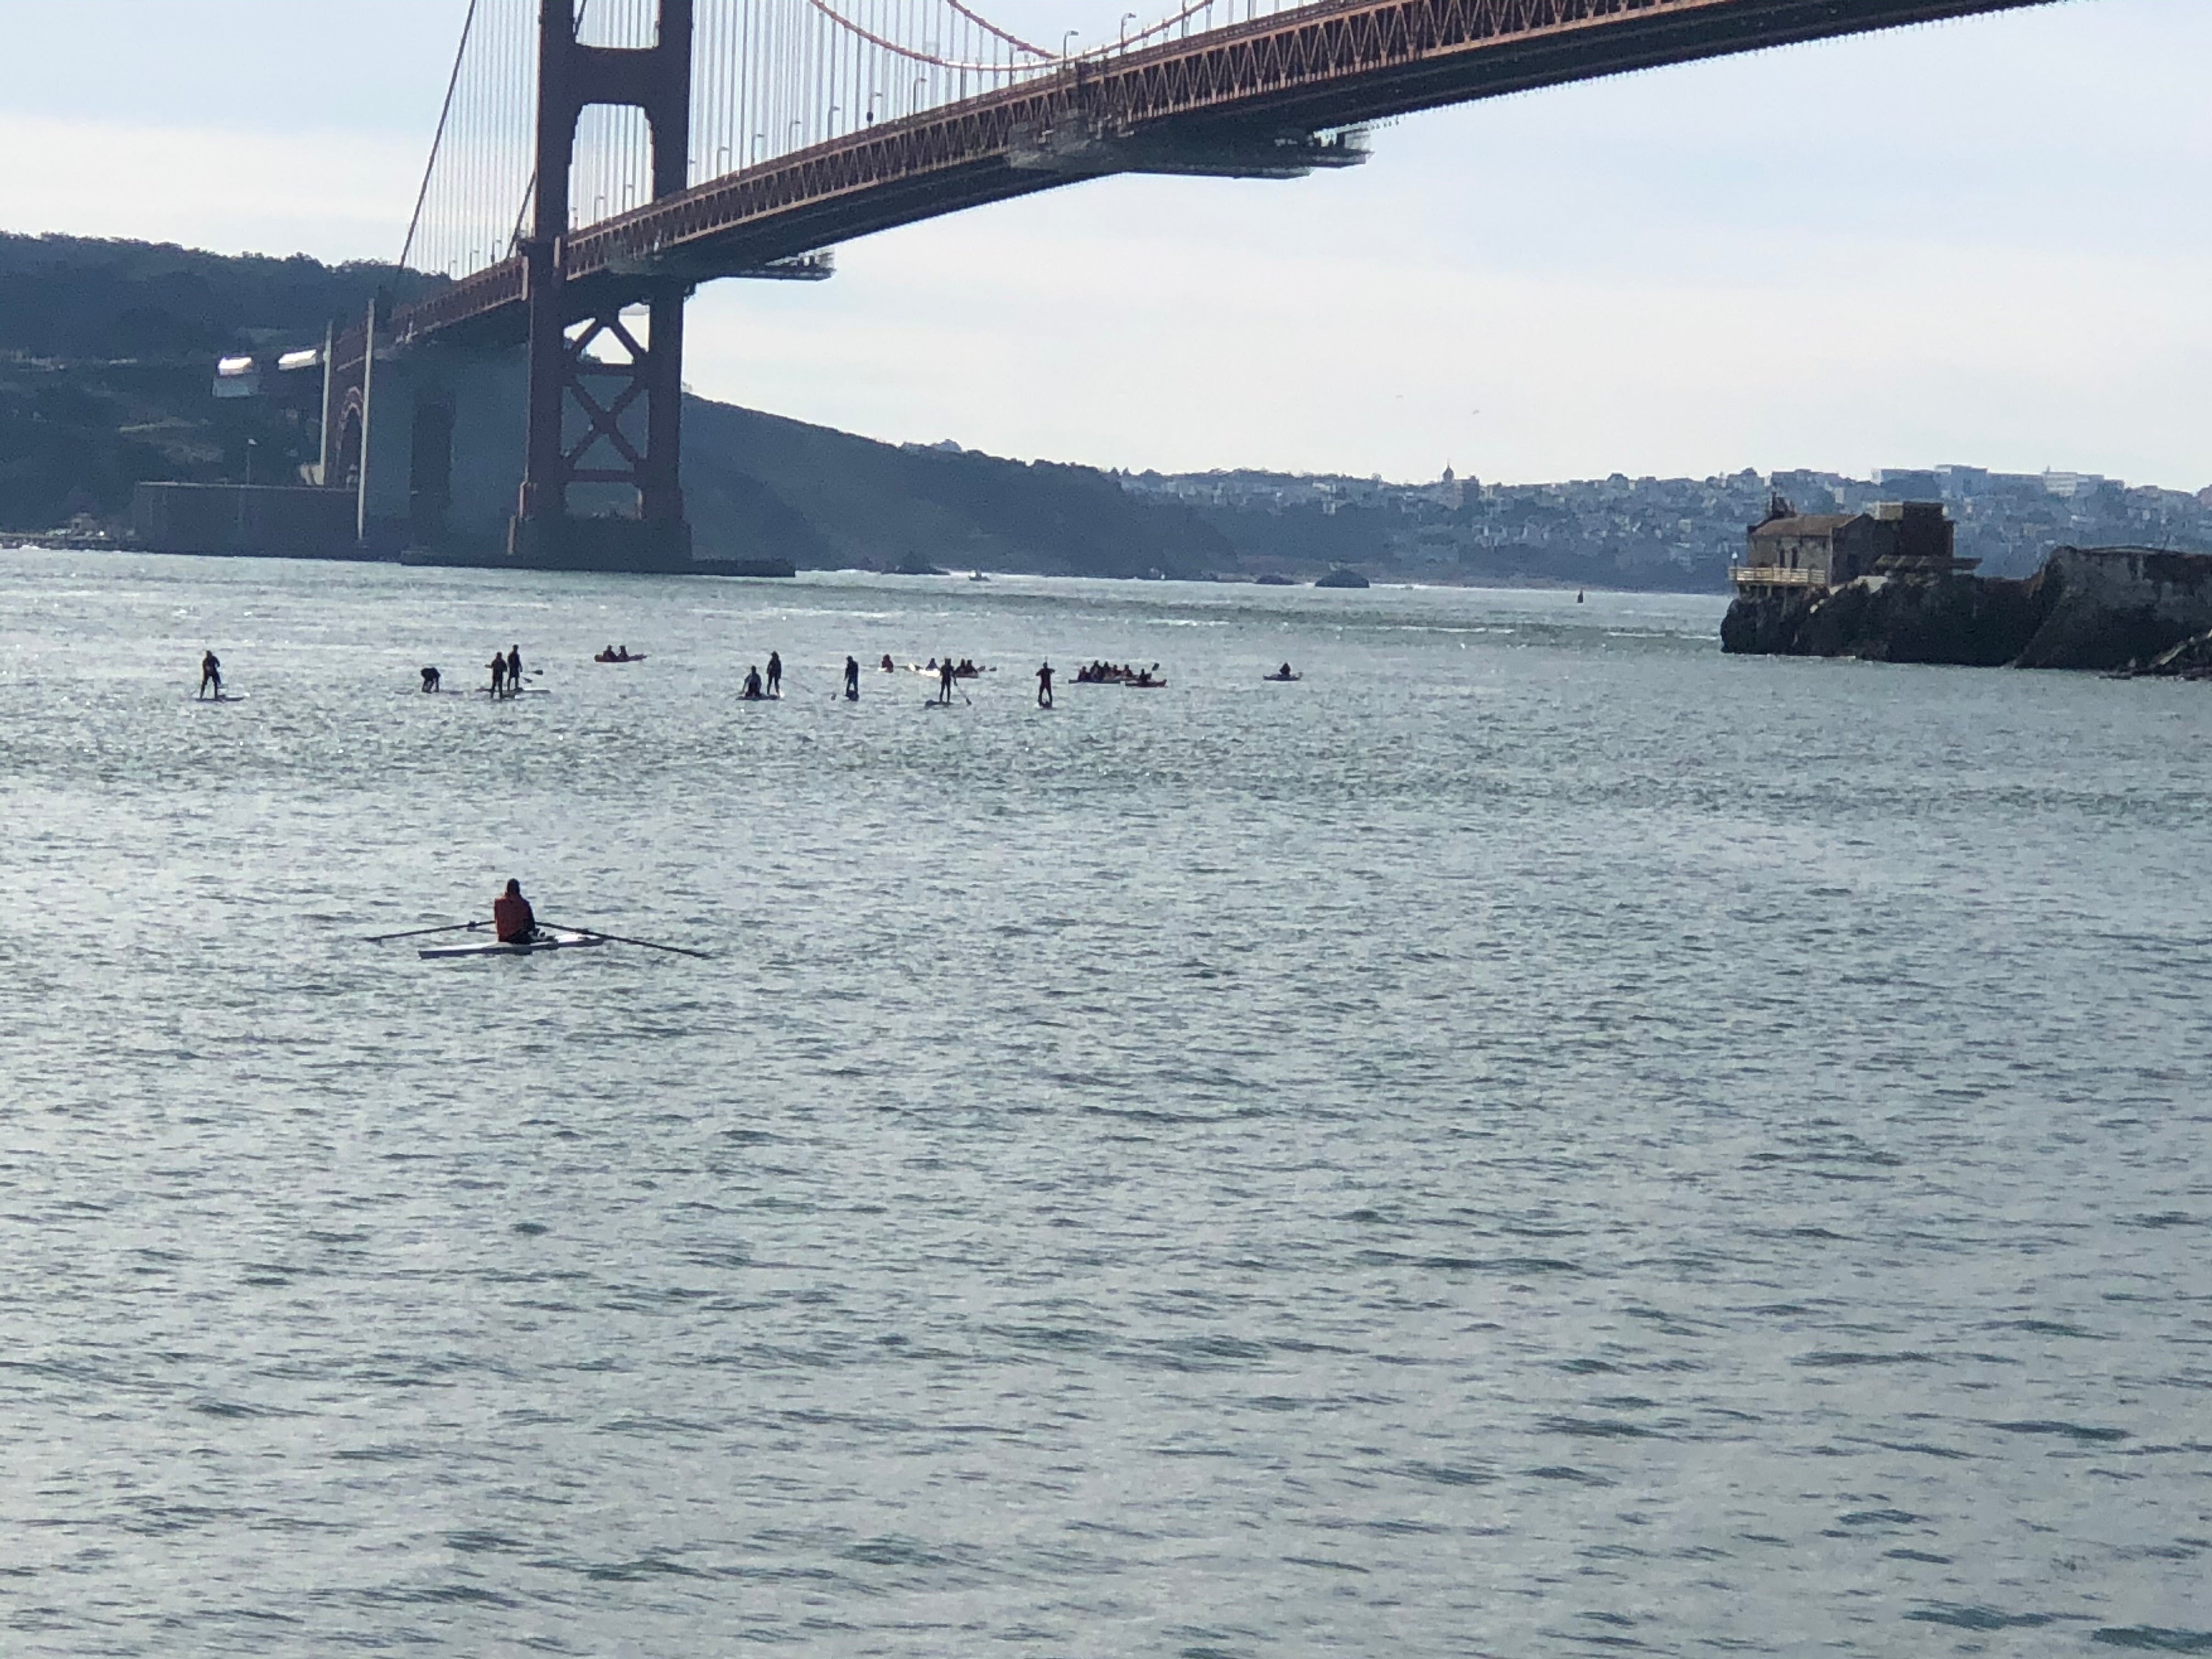 paddle boarders under the golden gate bridge